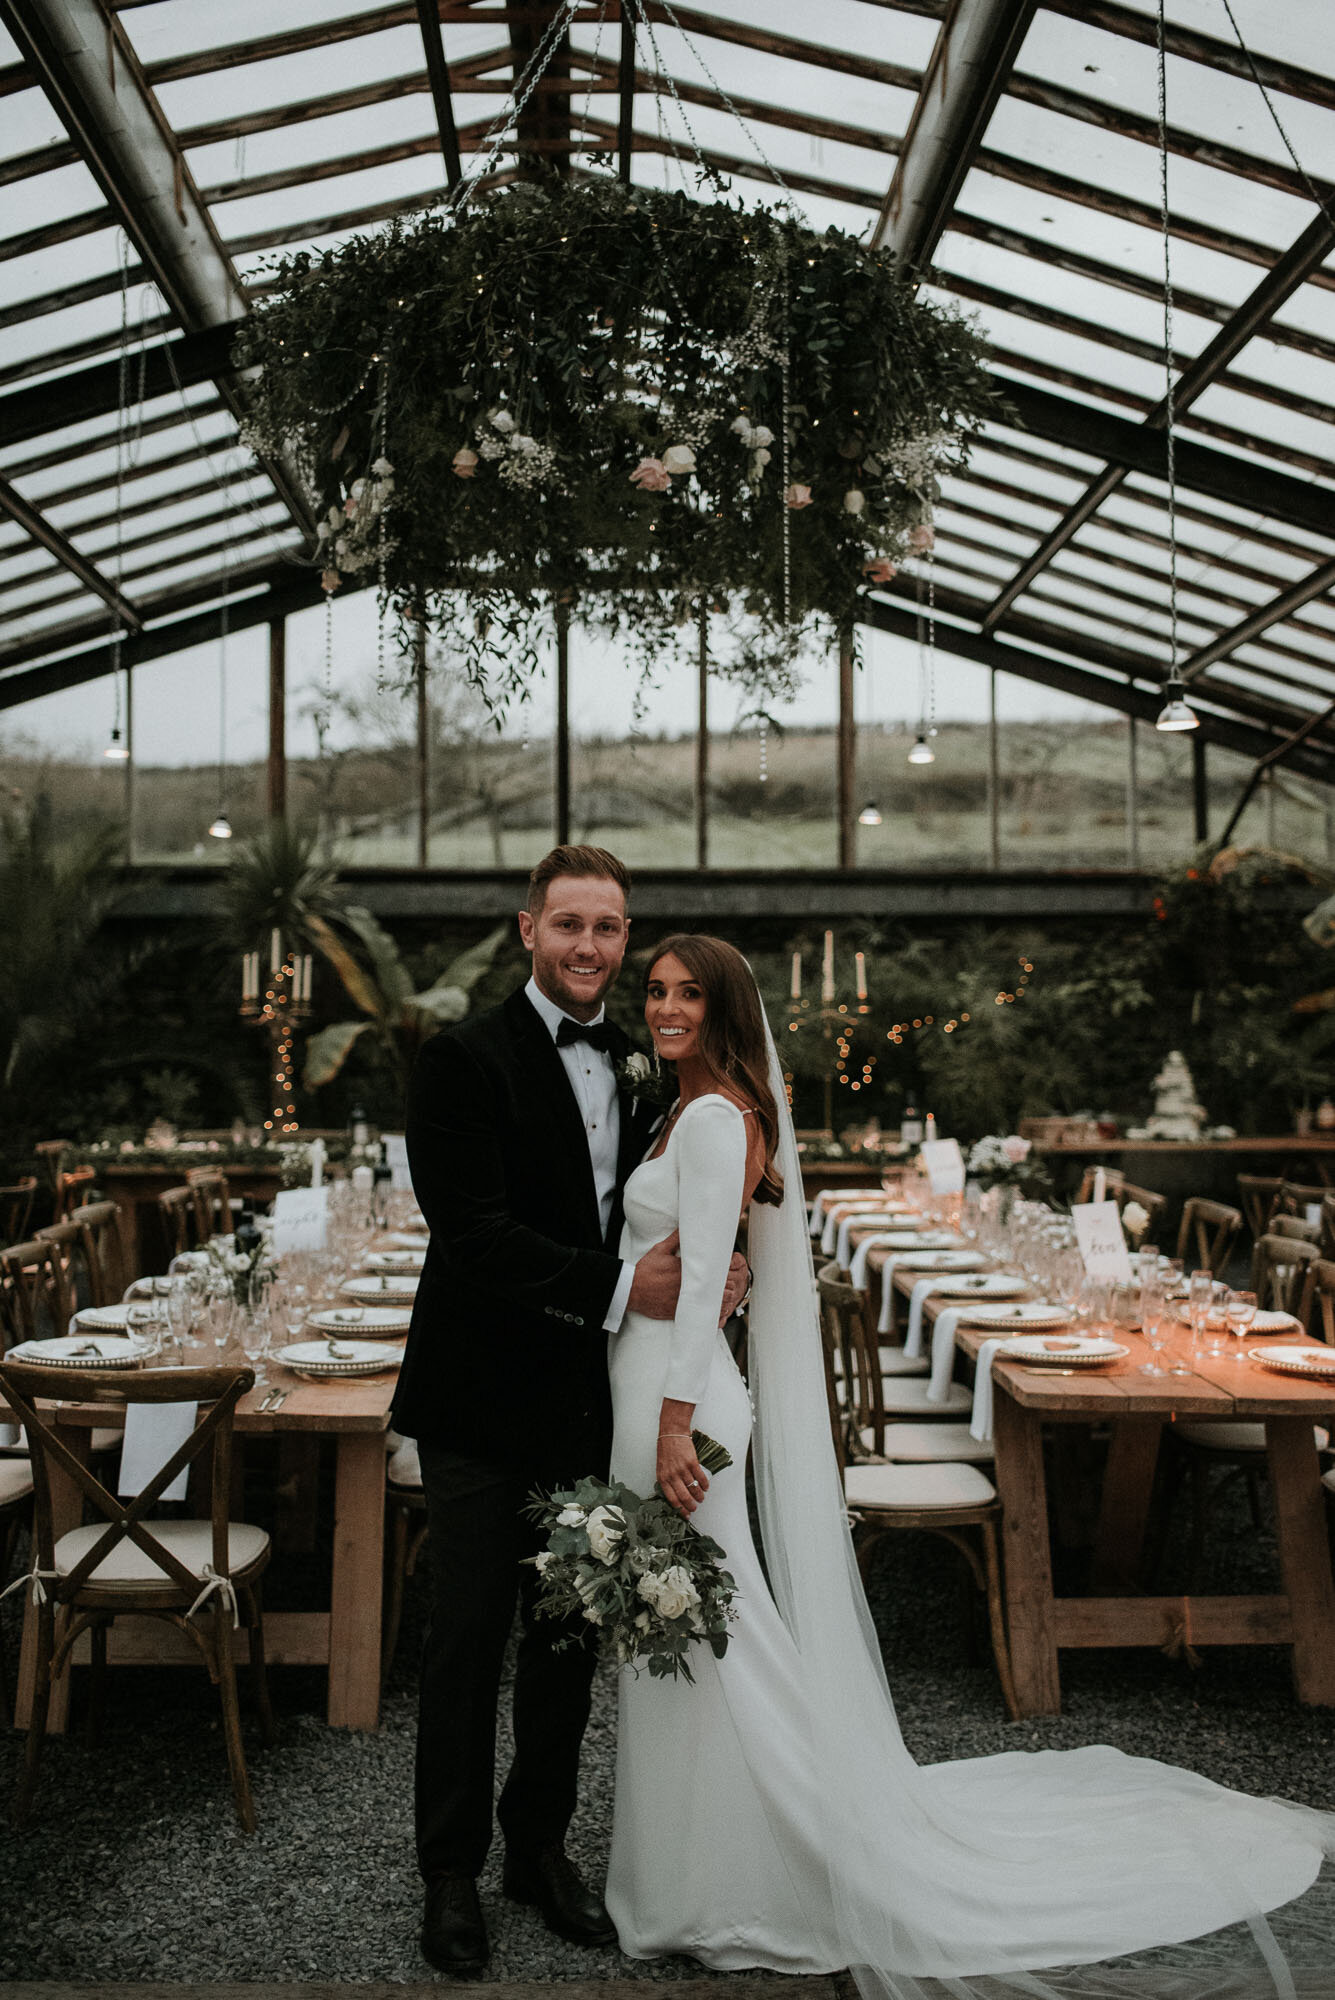 Anran Barn Wedding // Devon Wedding Photographer Katy Jones // Natural style wedding photography  // Fine art romantic images 